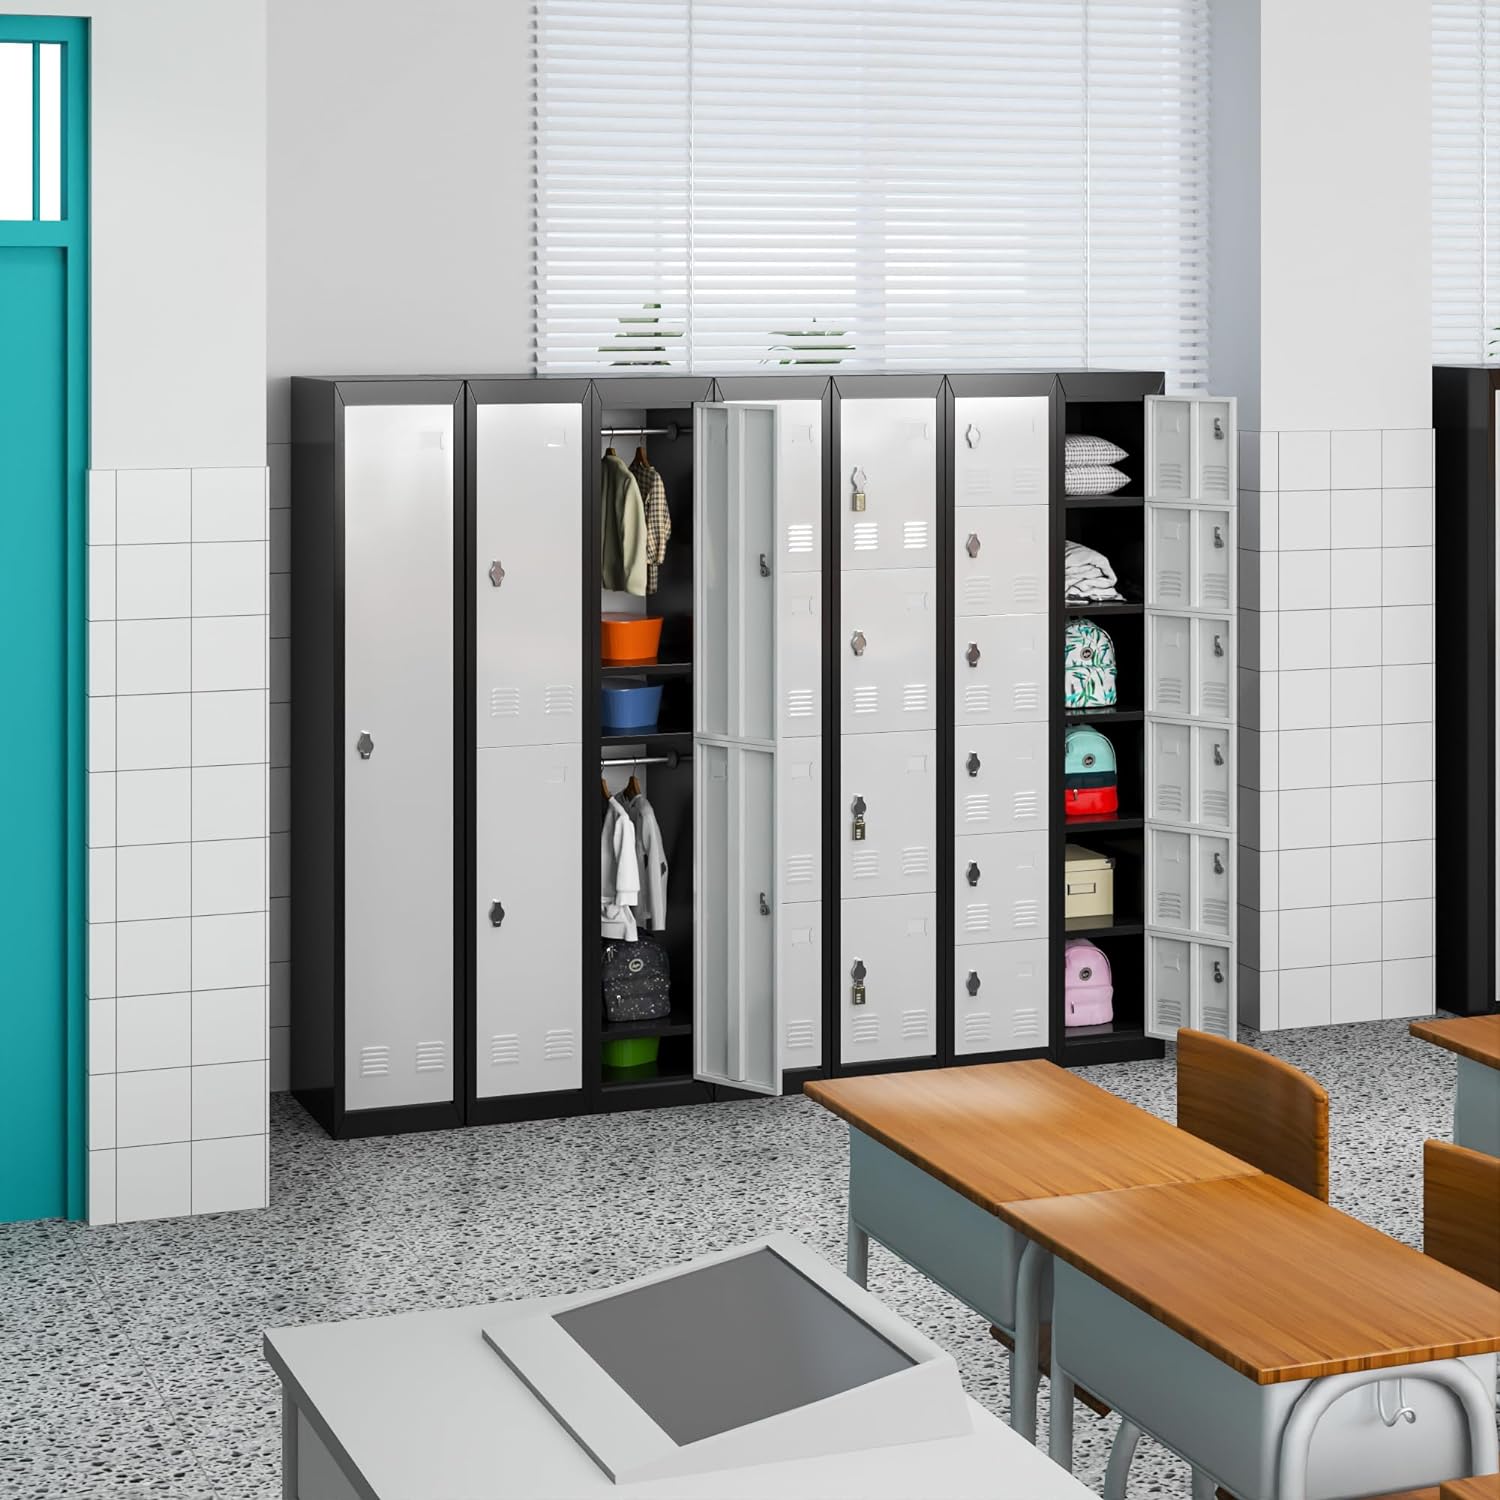 Yizosh Metal Lockers for Employees with Lock, Employees Locker Storage Cabinet with 2 Doors, Tall Steel Storage Locker for Gym, School, Office,Home (2 Gray Door)